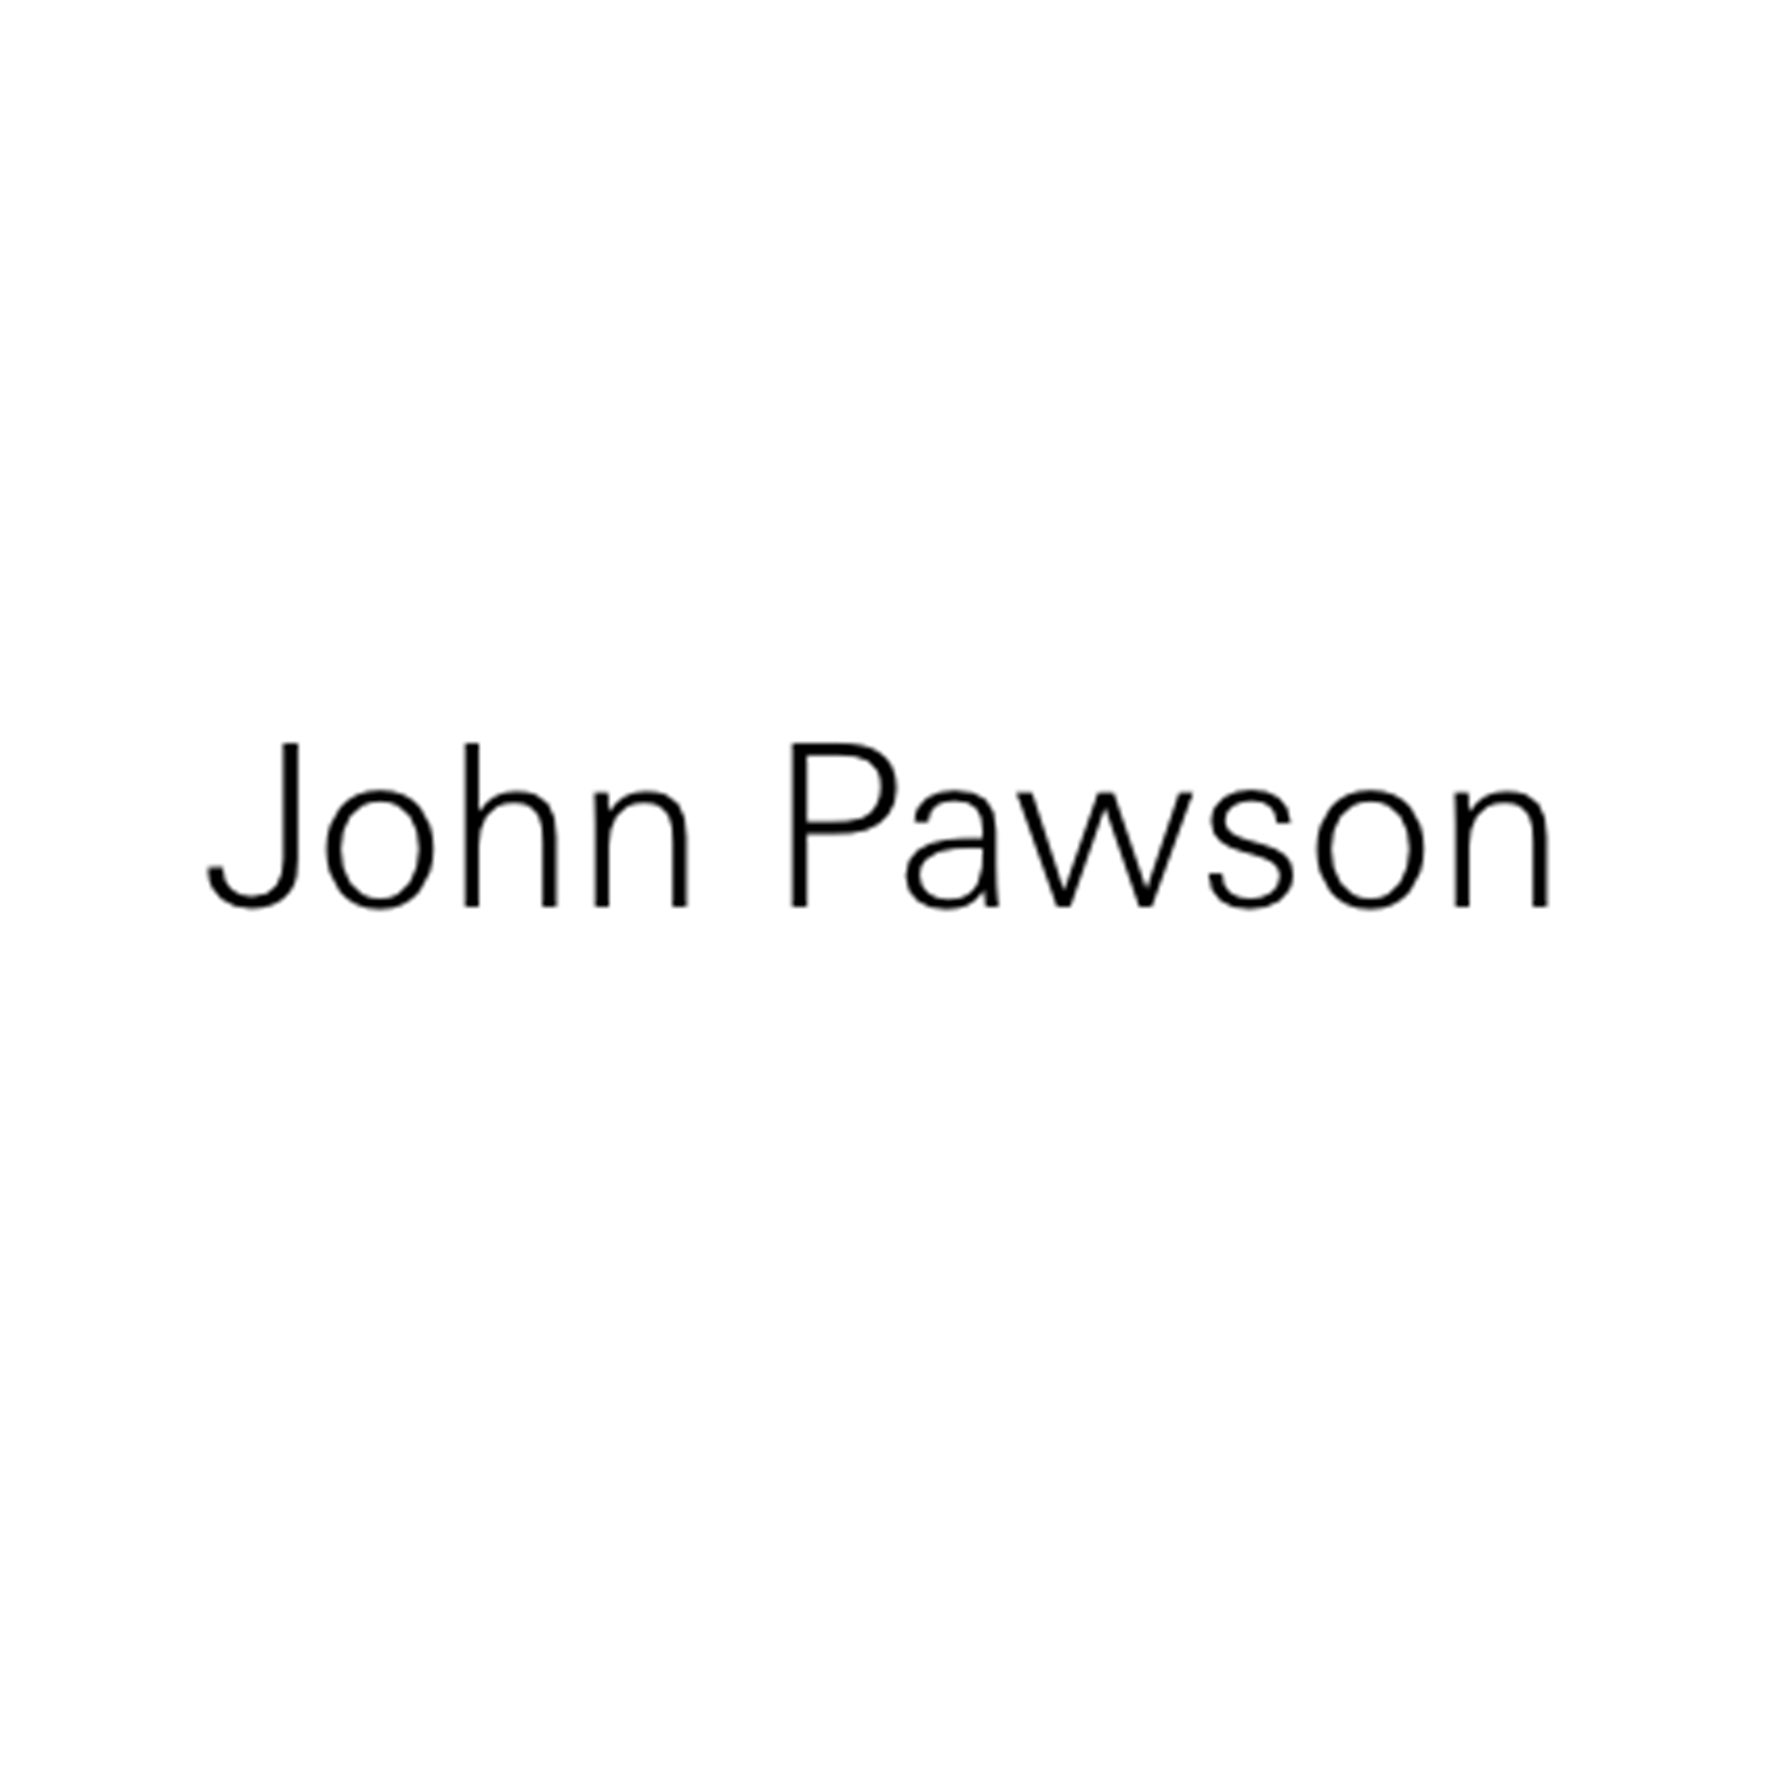 John Pawson